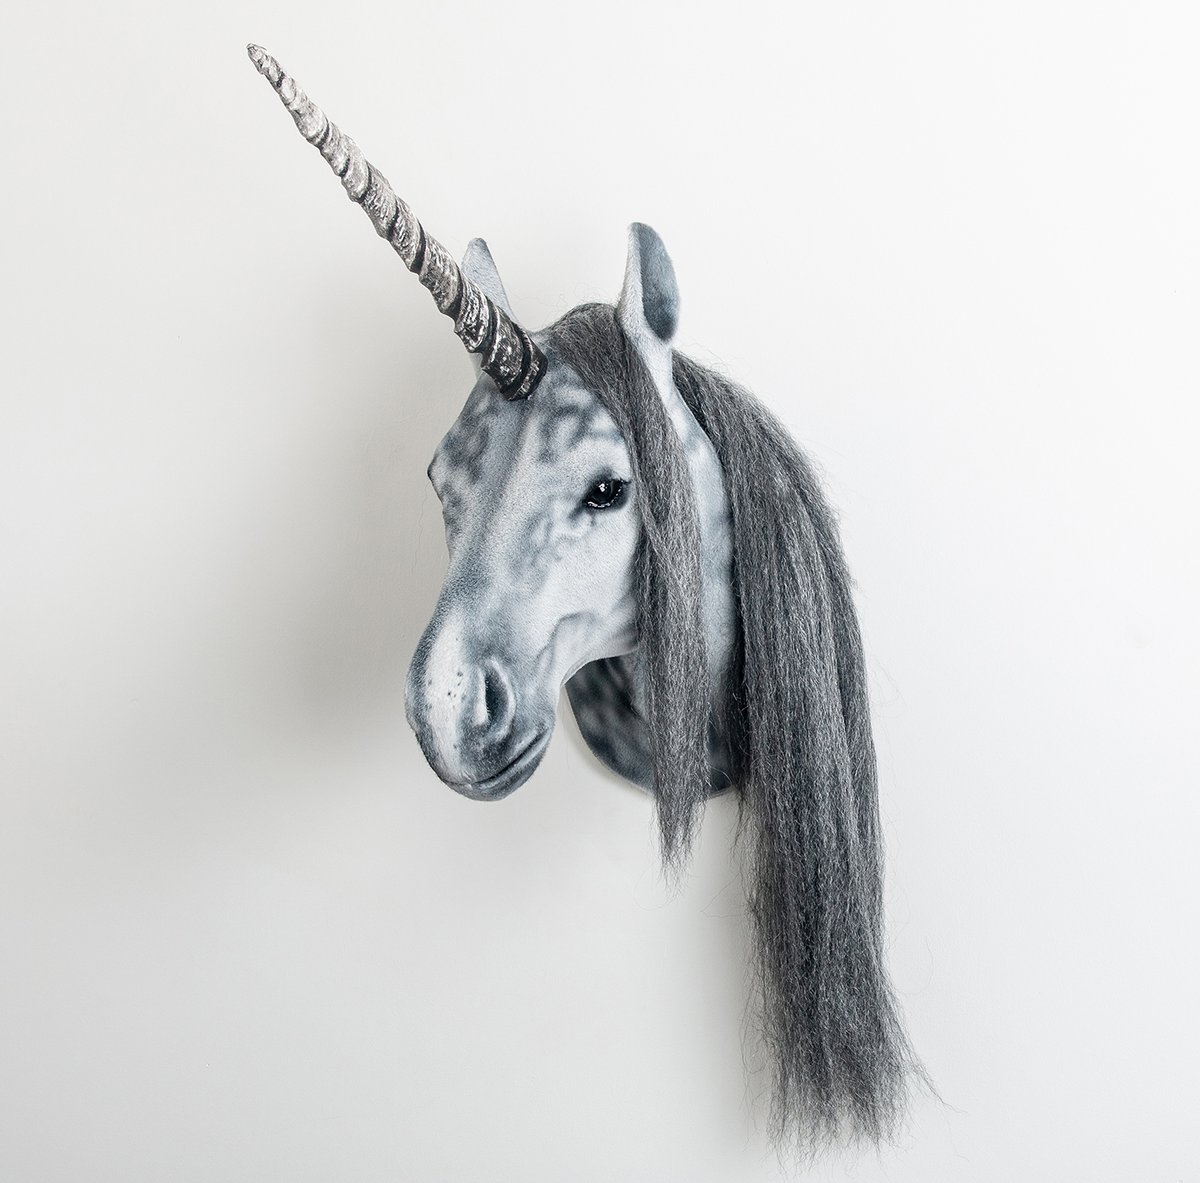 Image of Dapple Grey Unicorn Sculpture